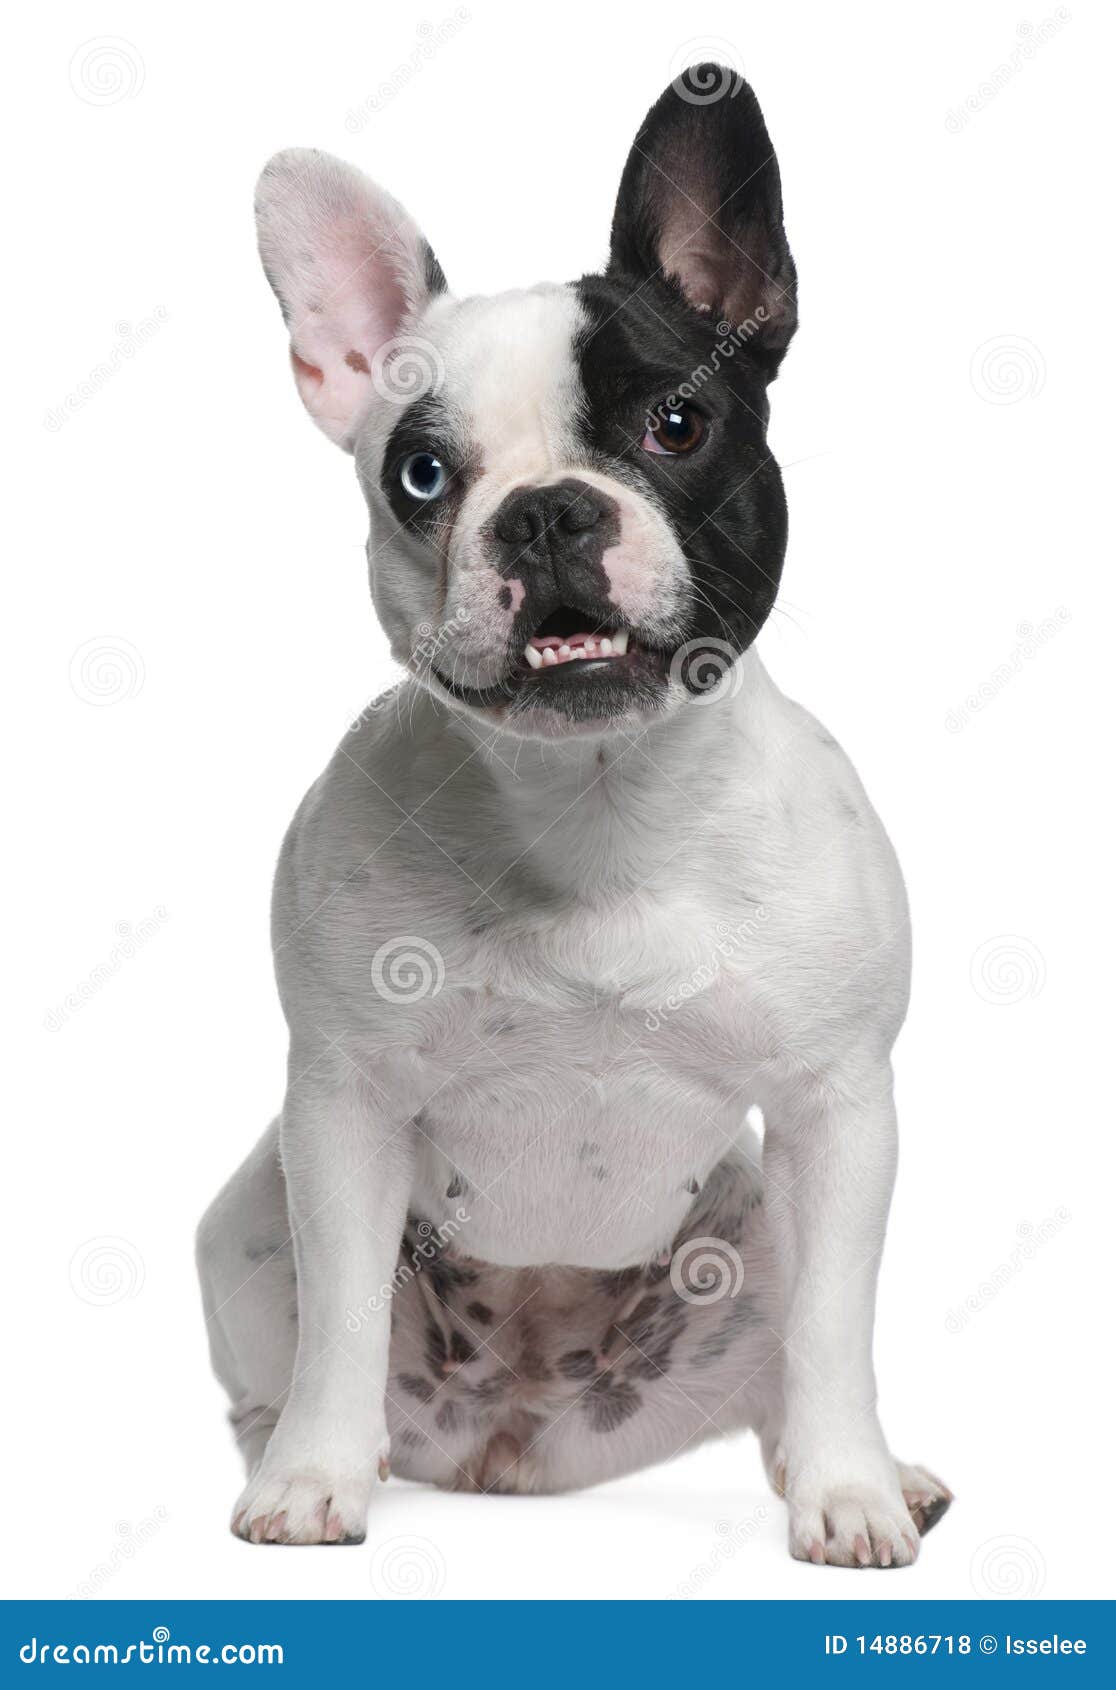 French Bulldog sitting stock photo. Image of french, copy - 14886718